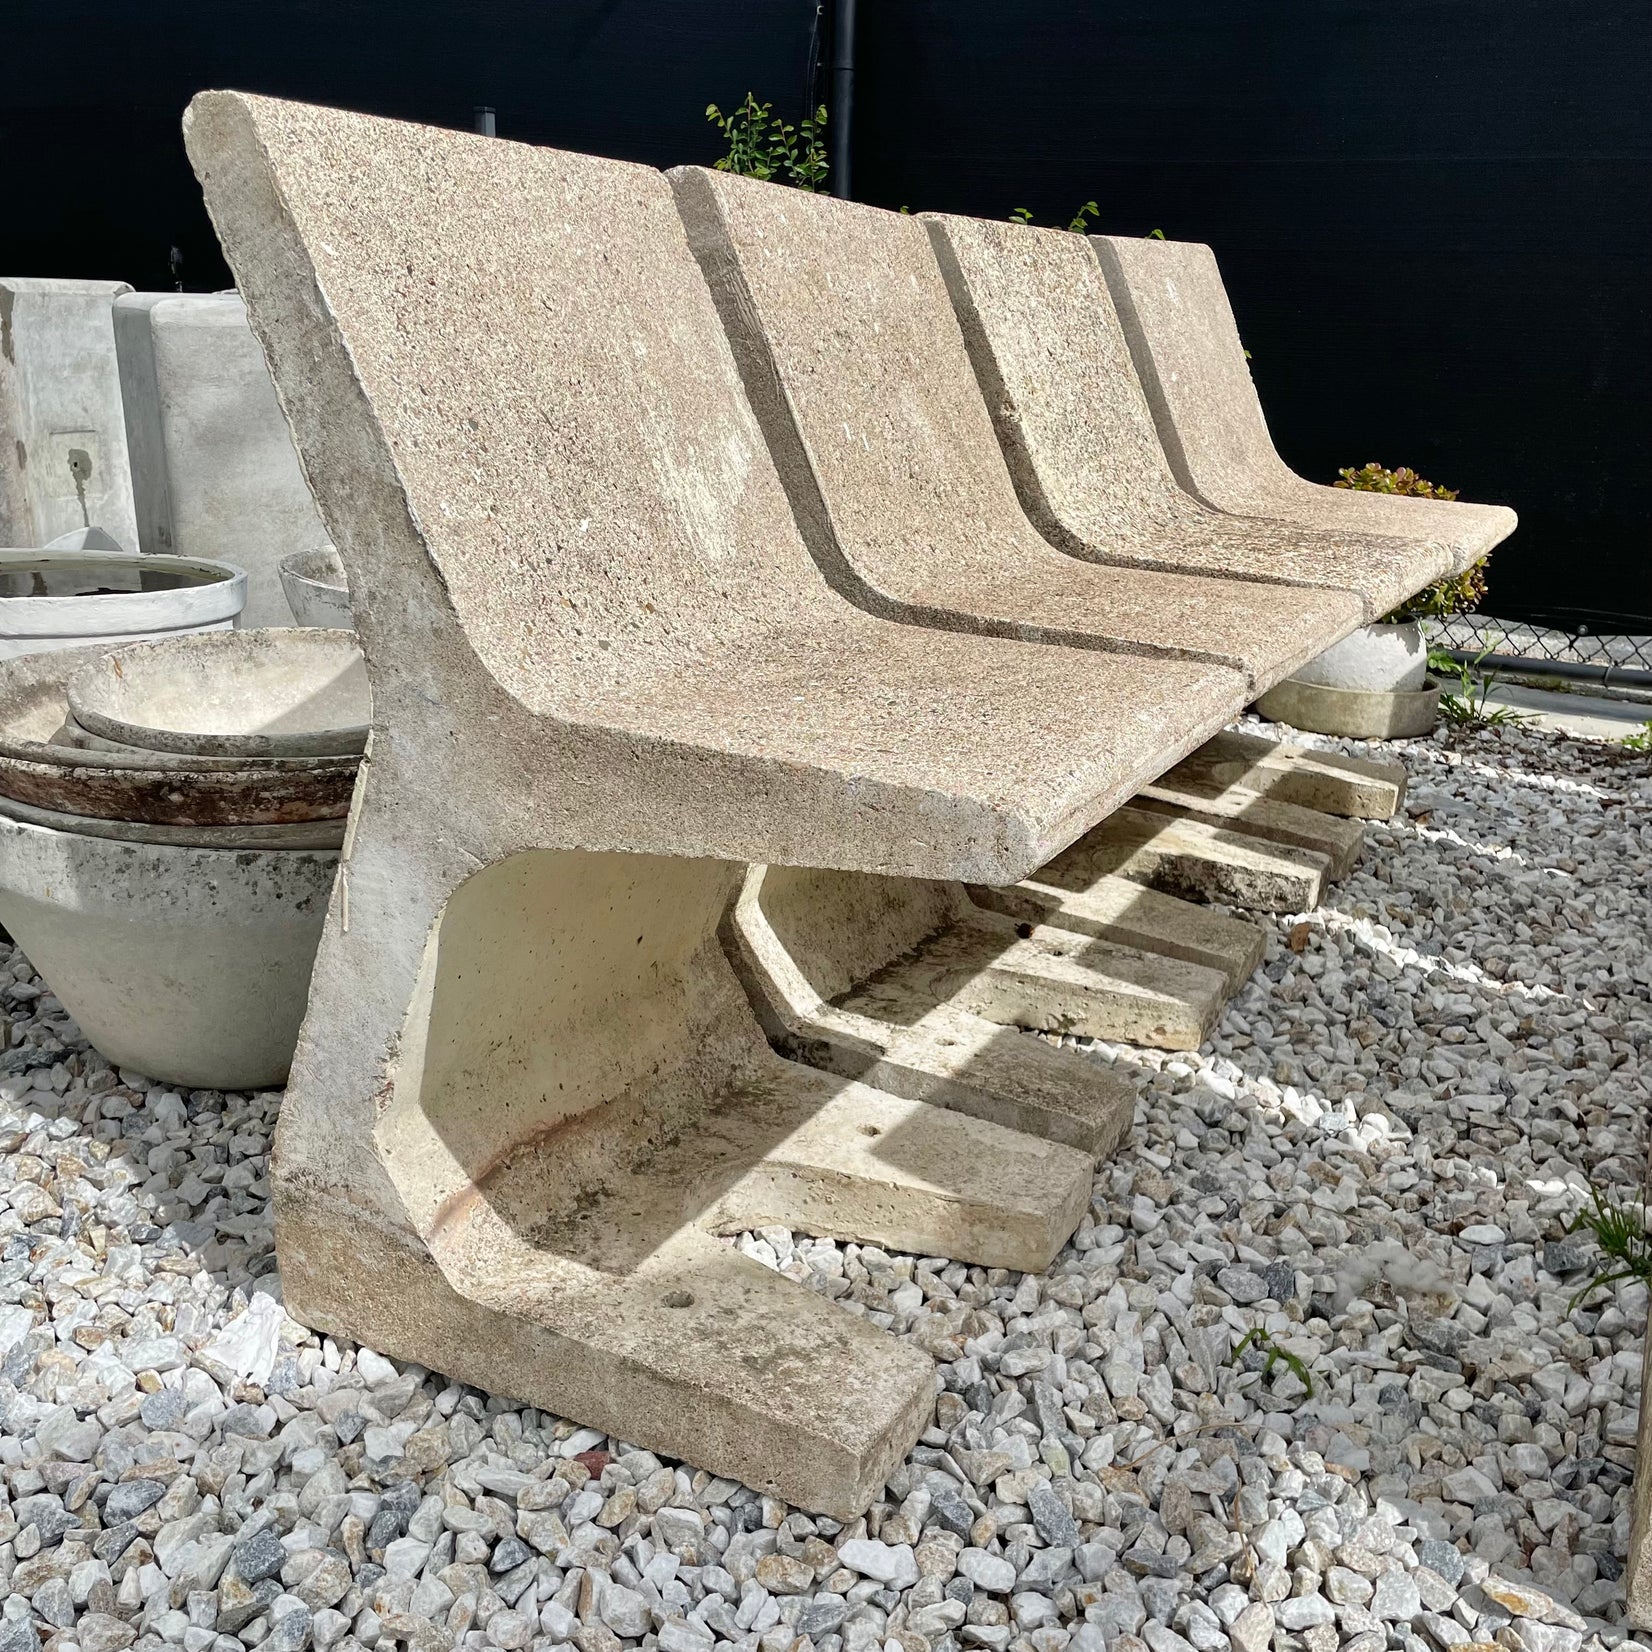 Monumental Concrete Sculptural Chairs, 1970s France